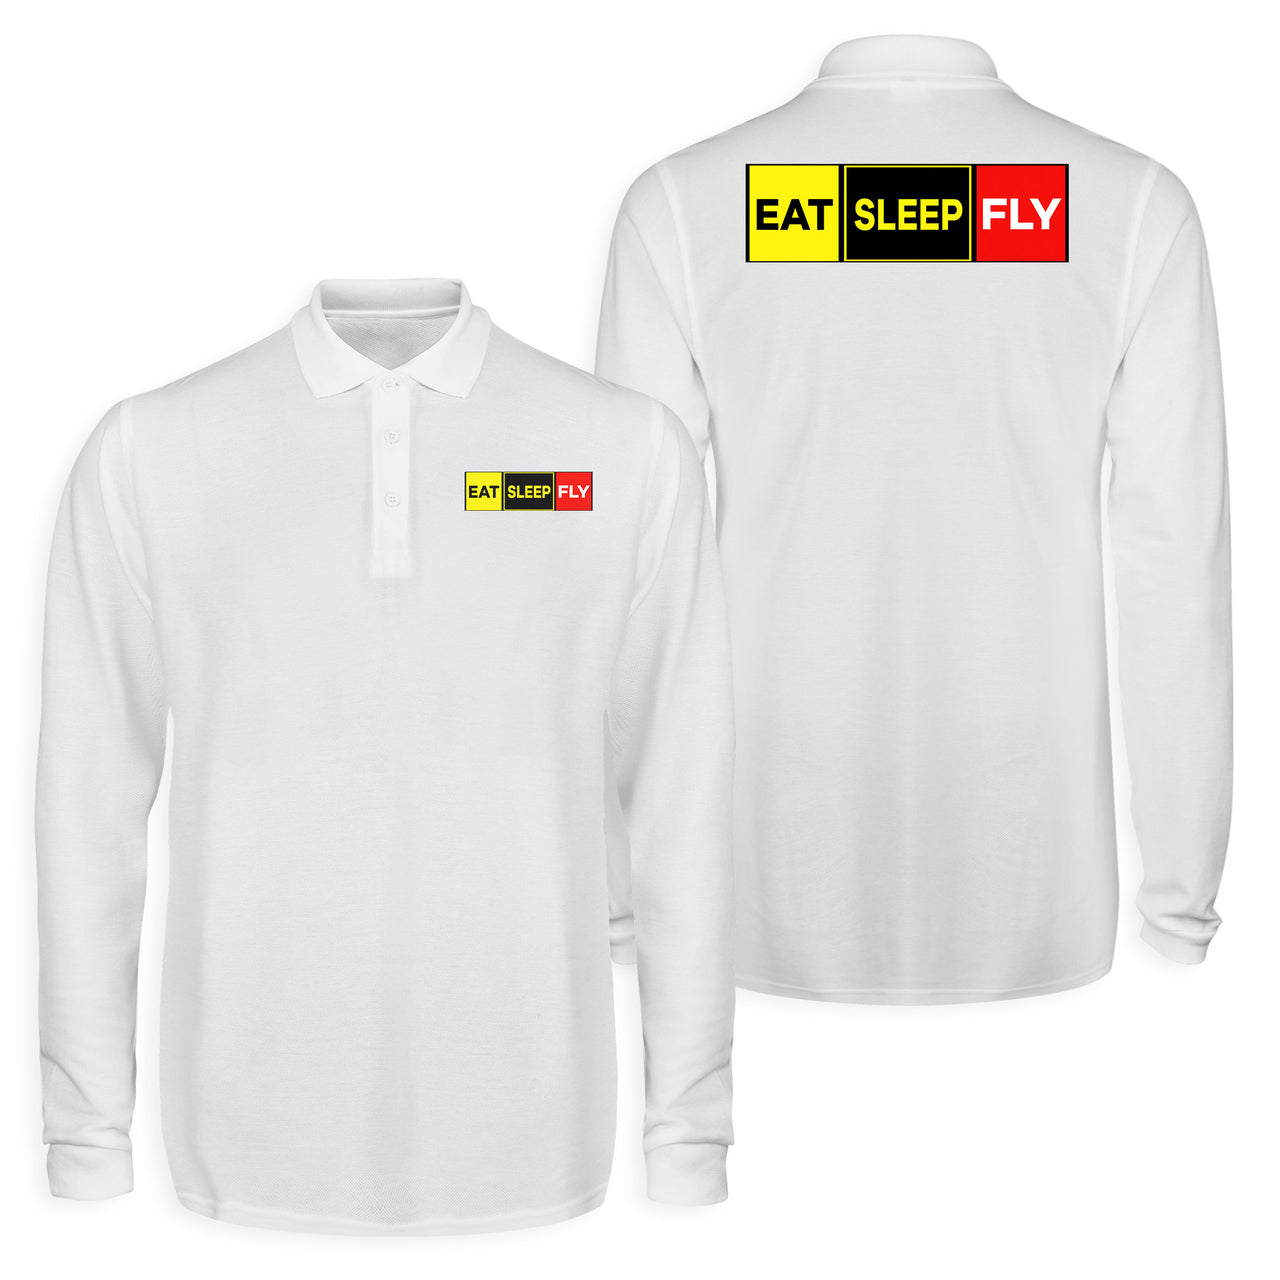 Eat Sleep Fly (Colourful) Designed Long Sleeve Polo T-Shirts (Double-Side)